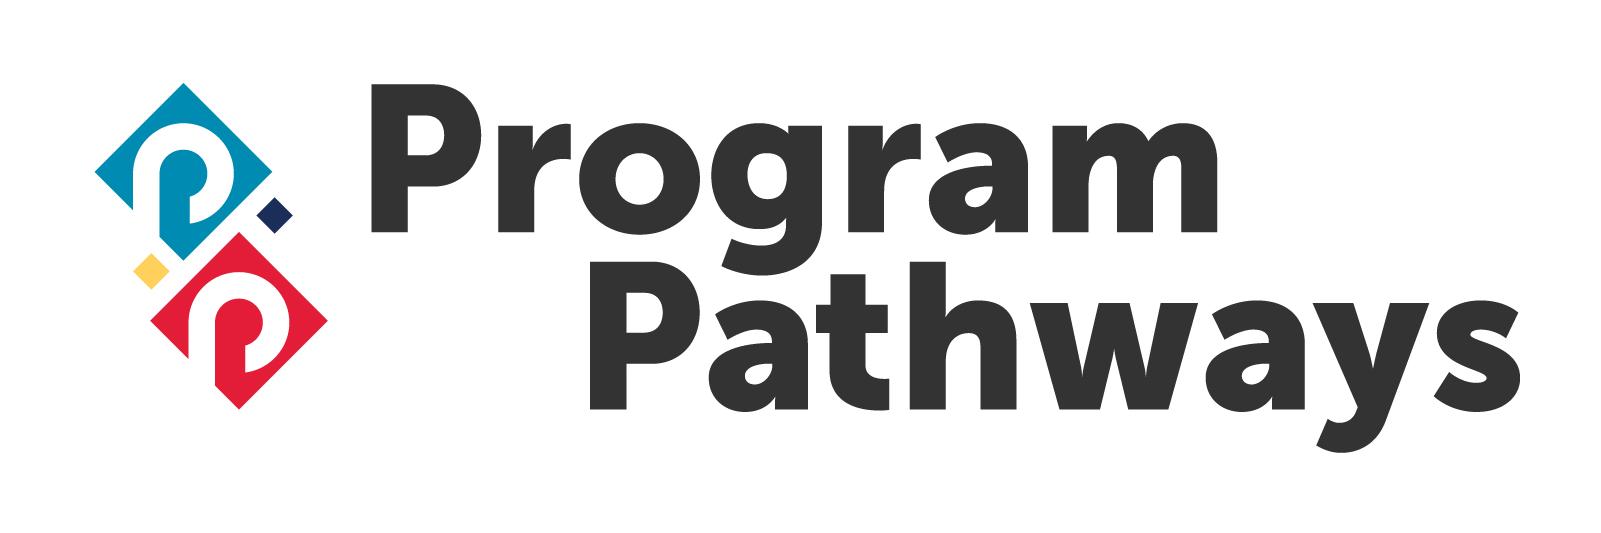 Program Pathways logo